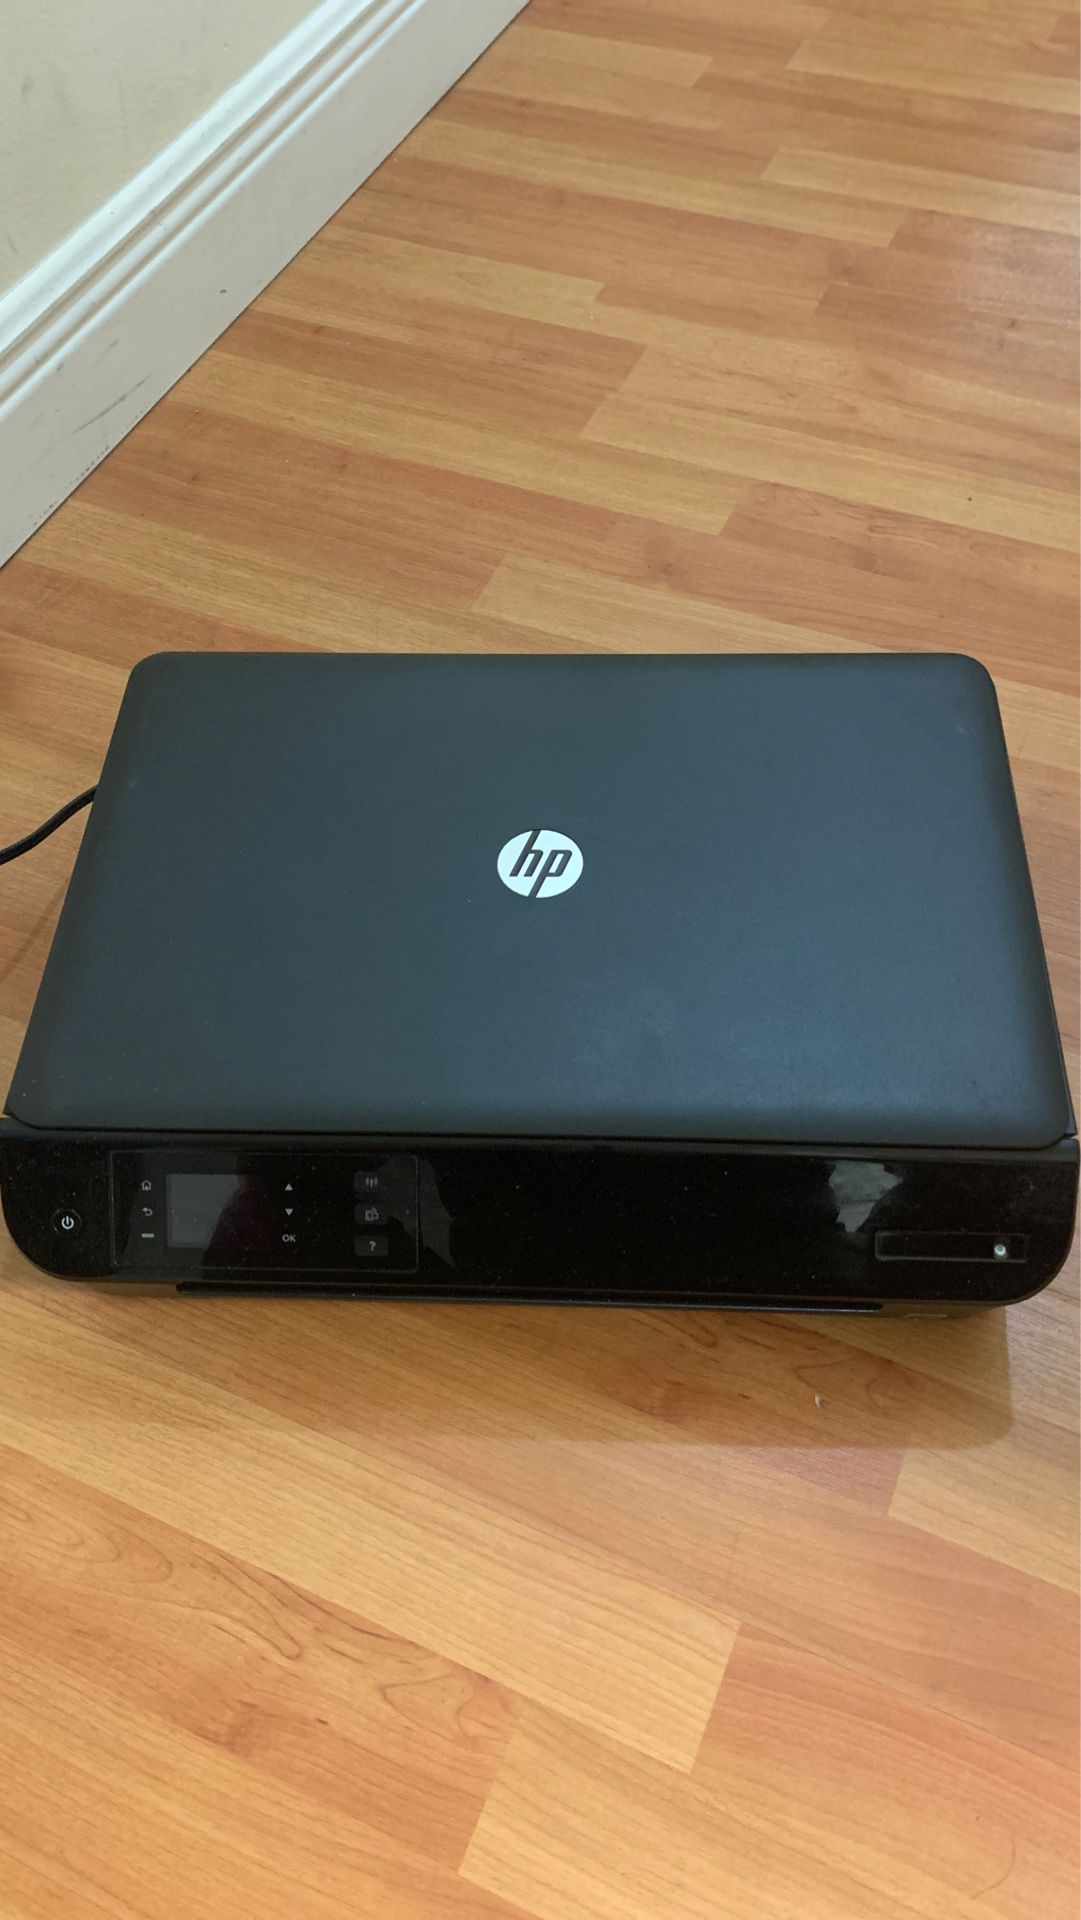 Black HP Envy 4502 Printer